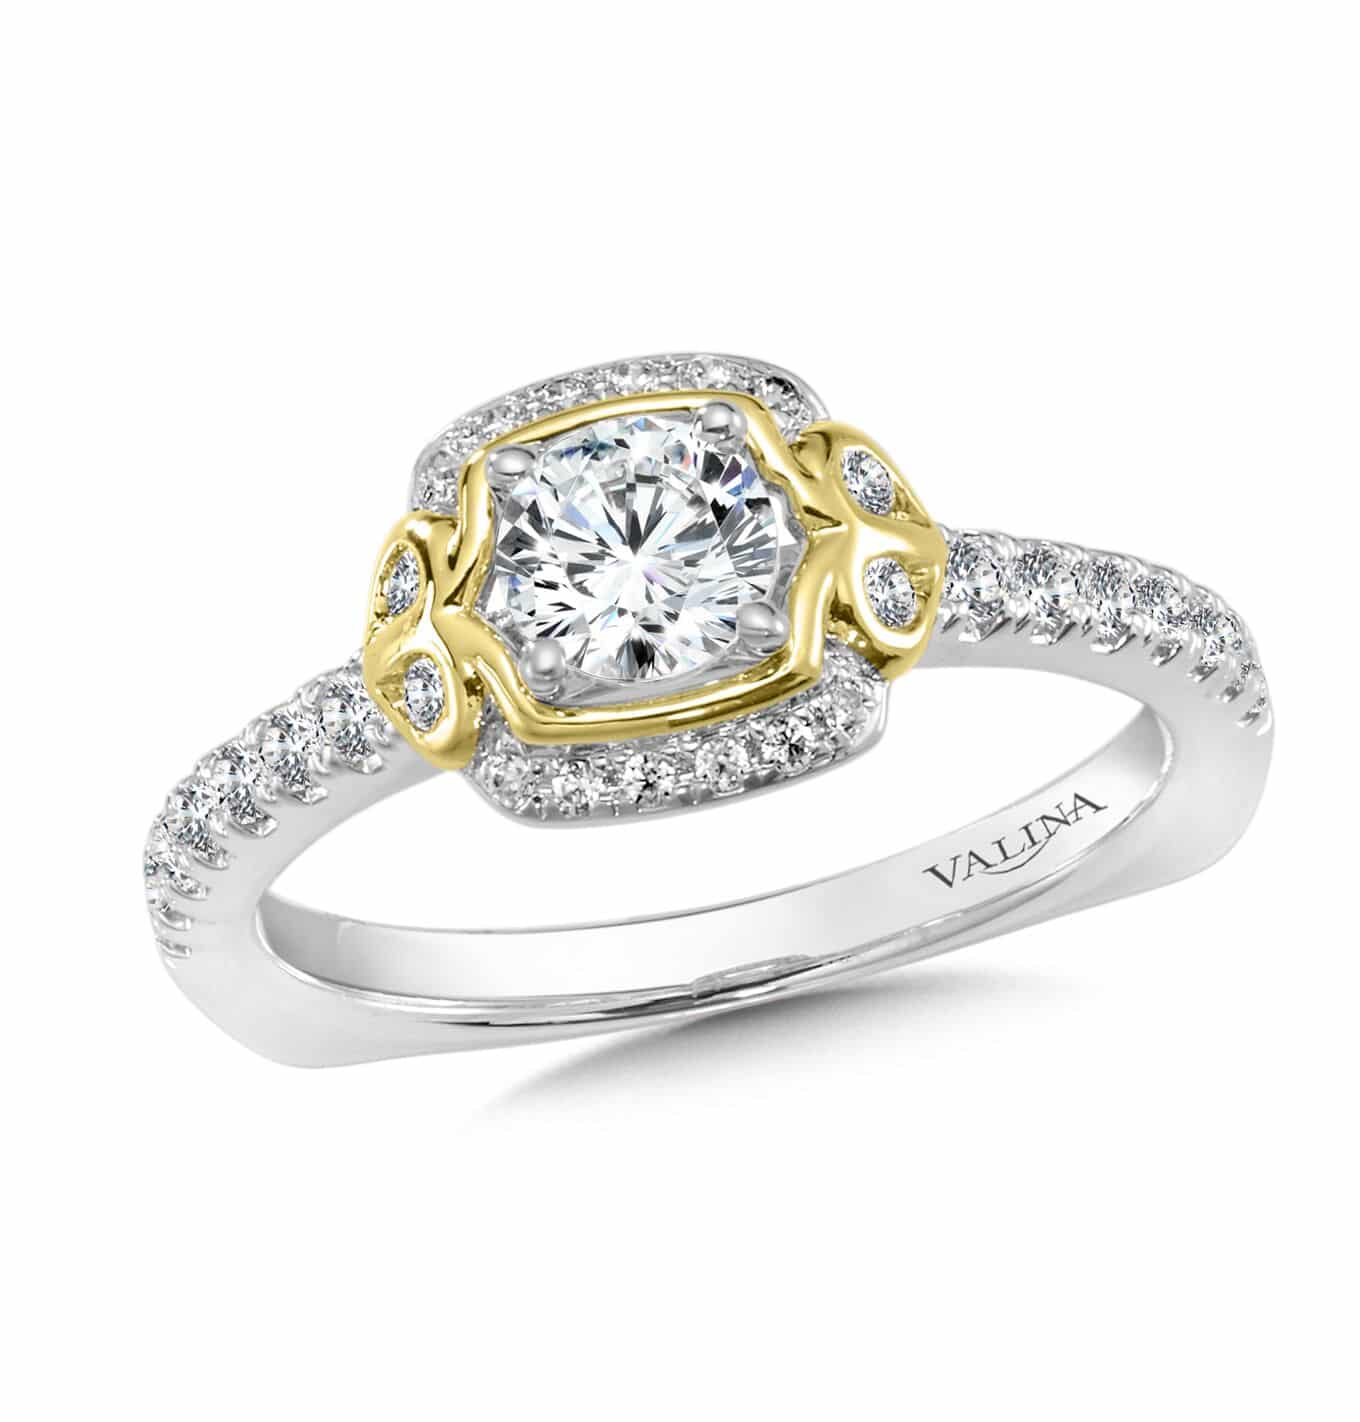 Custom Bezel Round Diamond Engagement Ring with a 1 carat halo - custom design